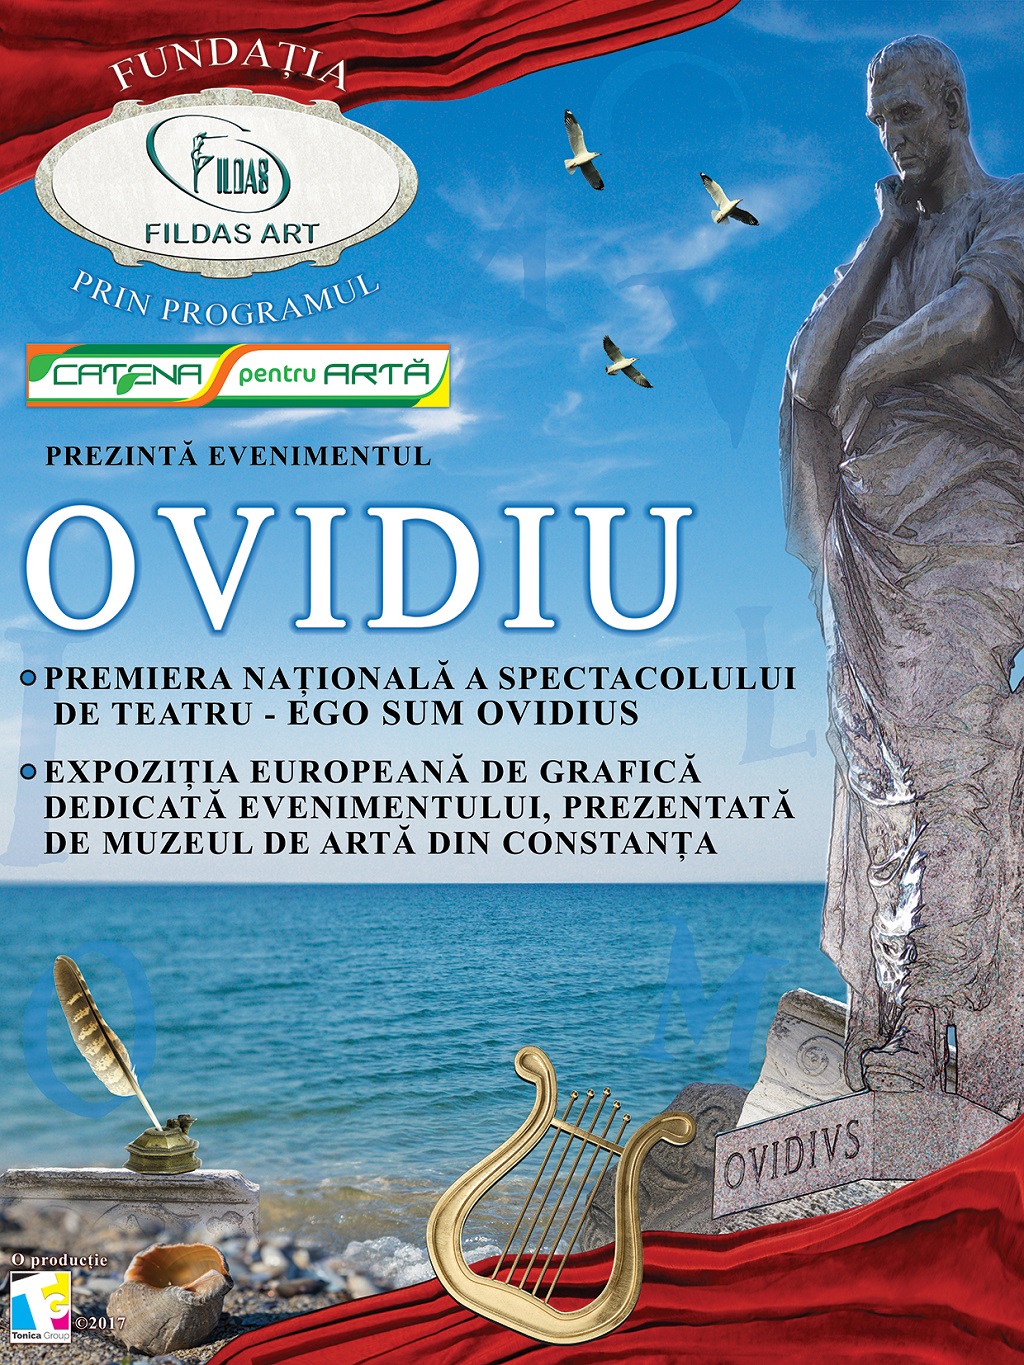 Ovidius, celebrat printr-un spectacol unic, sustinut de Catena